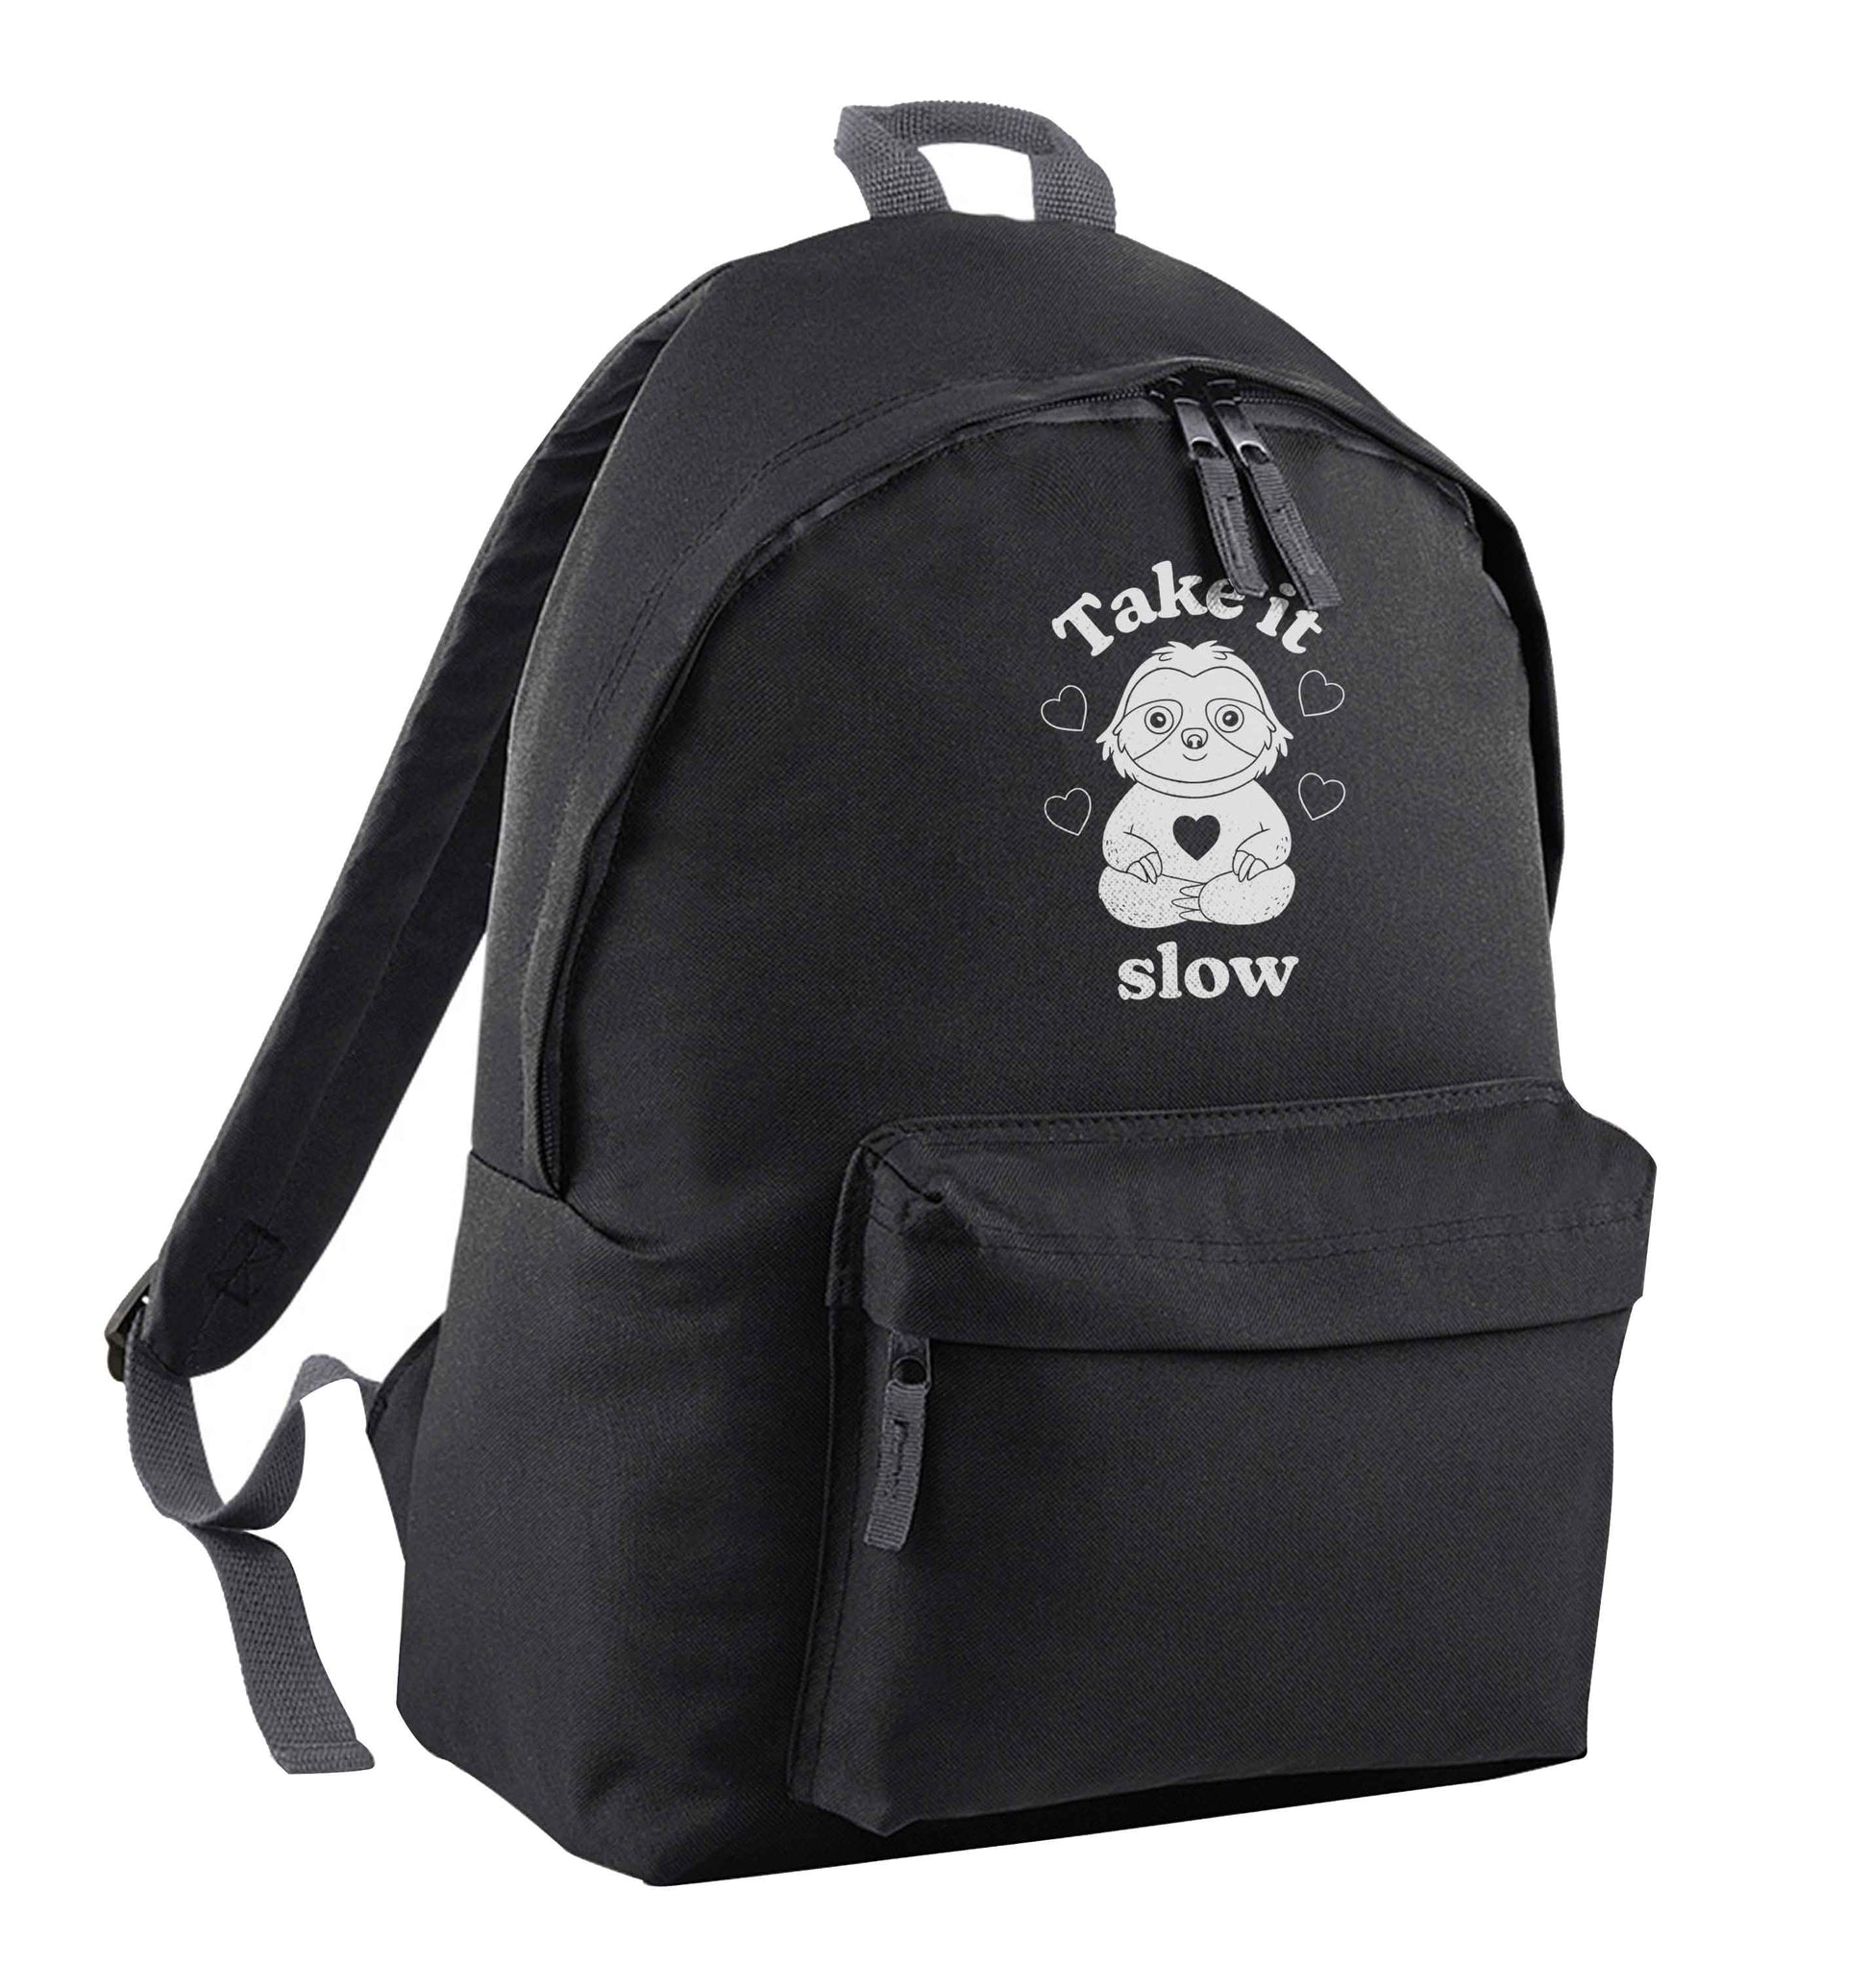 Take it slow black children's backpack